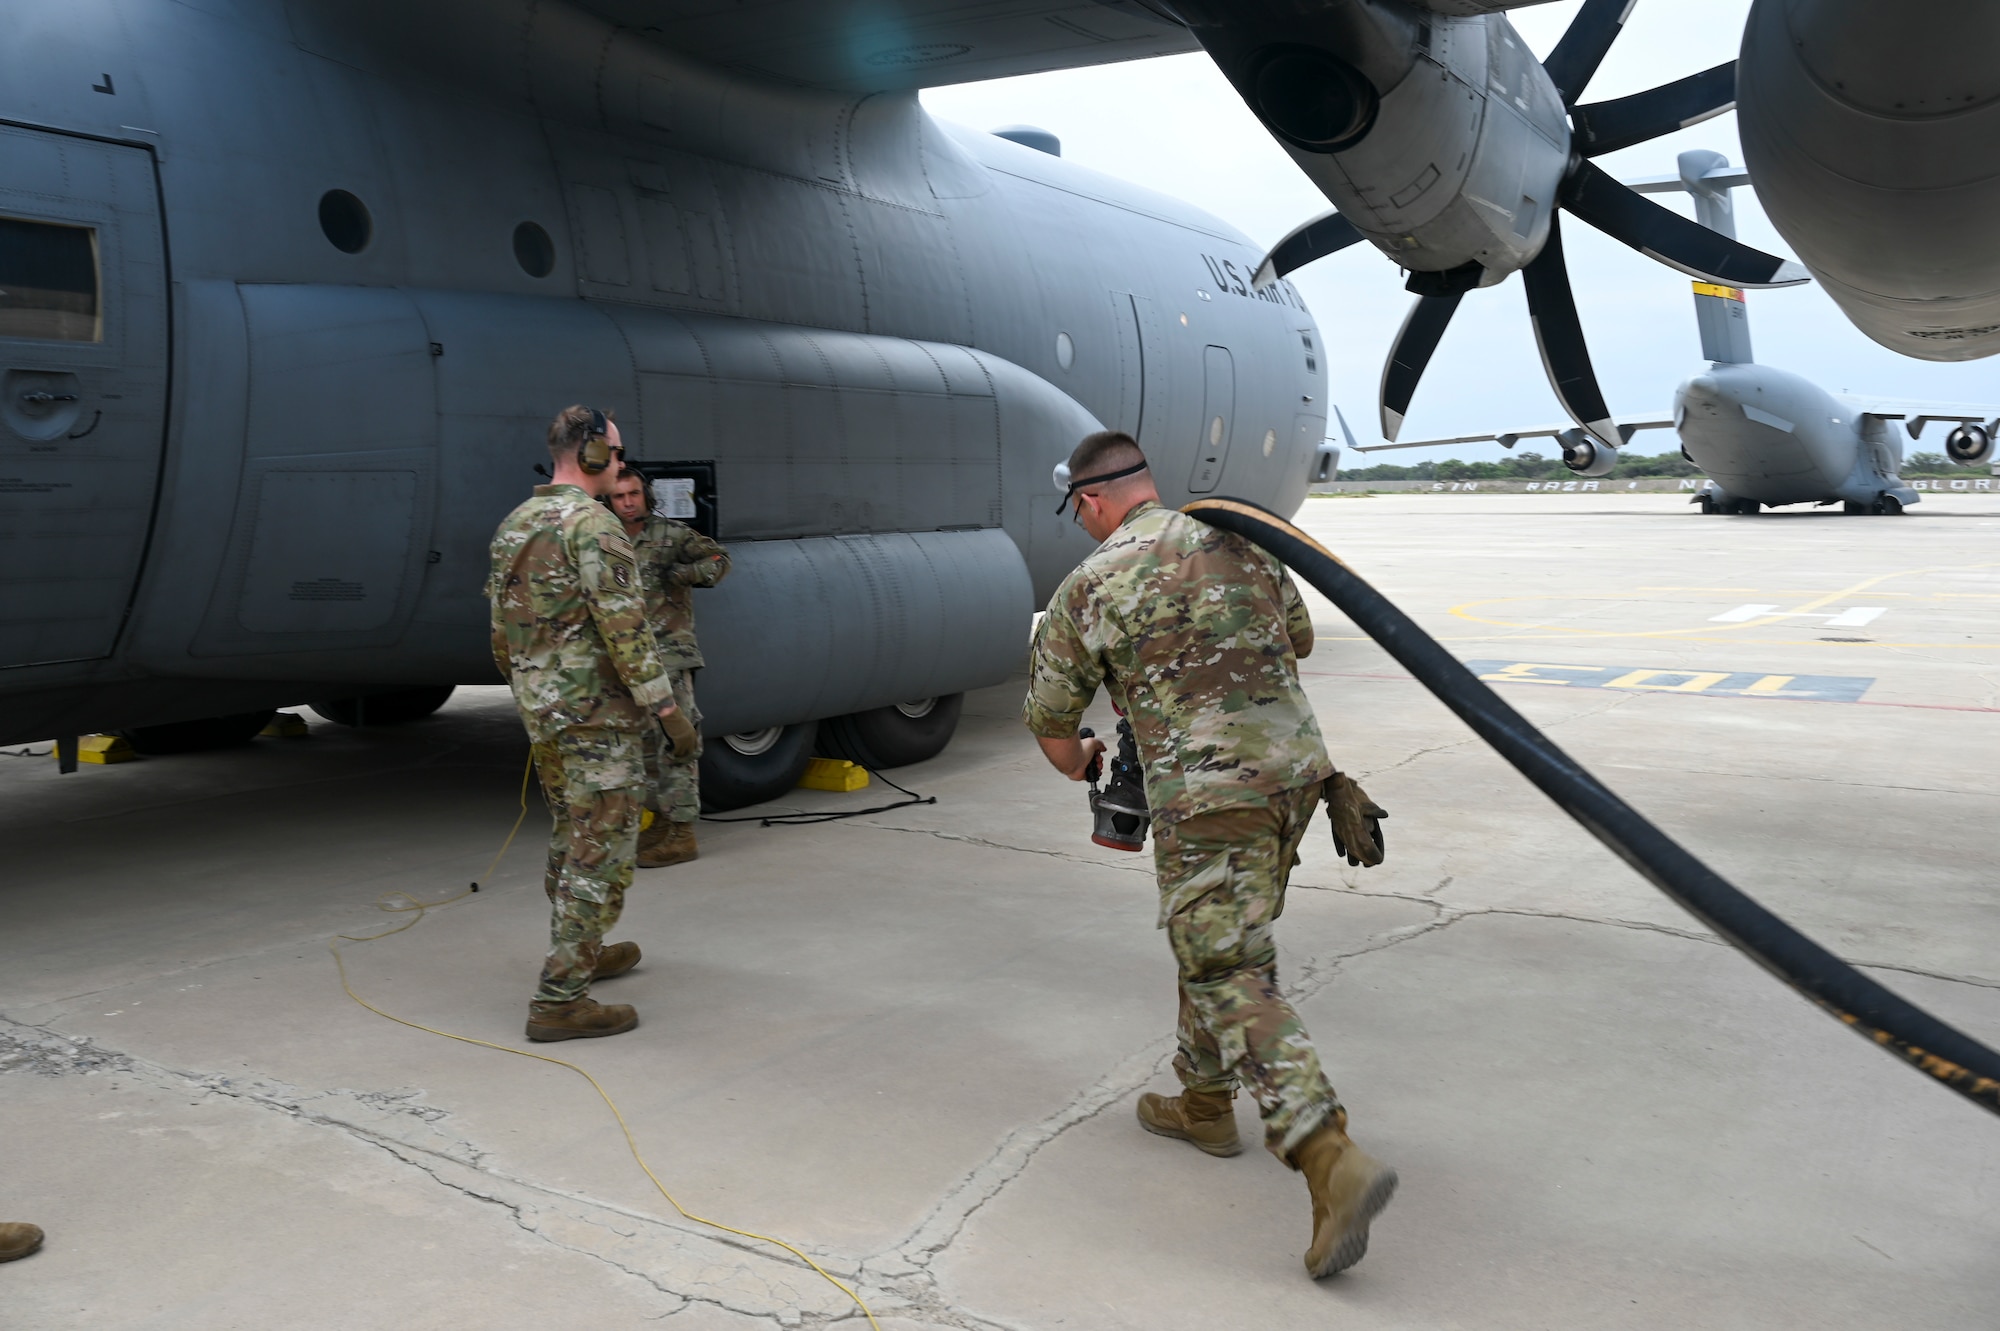 An Airman pulls a fuel hose toward a C-130 cargo aircraft while another Waits